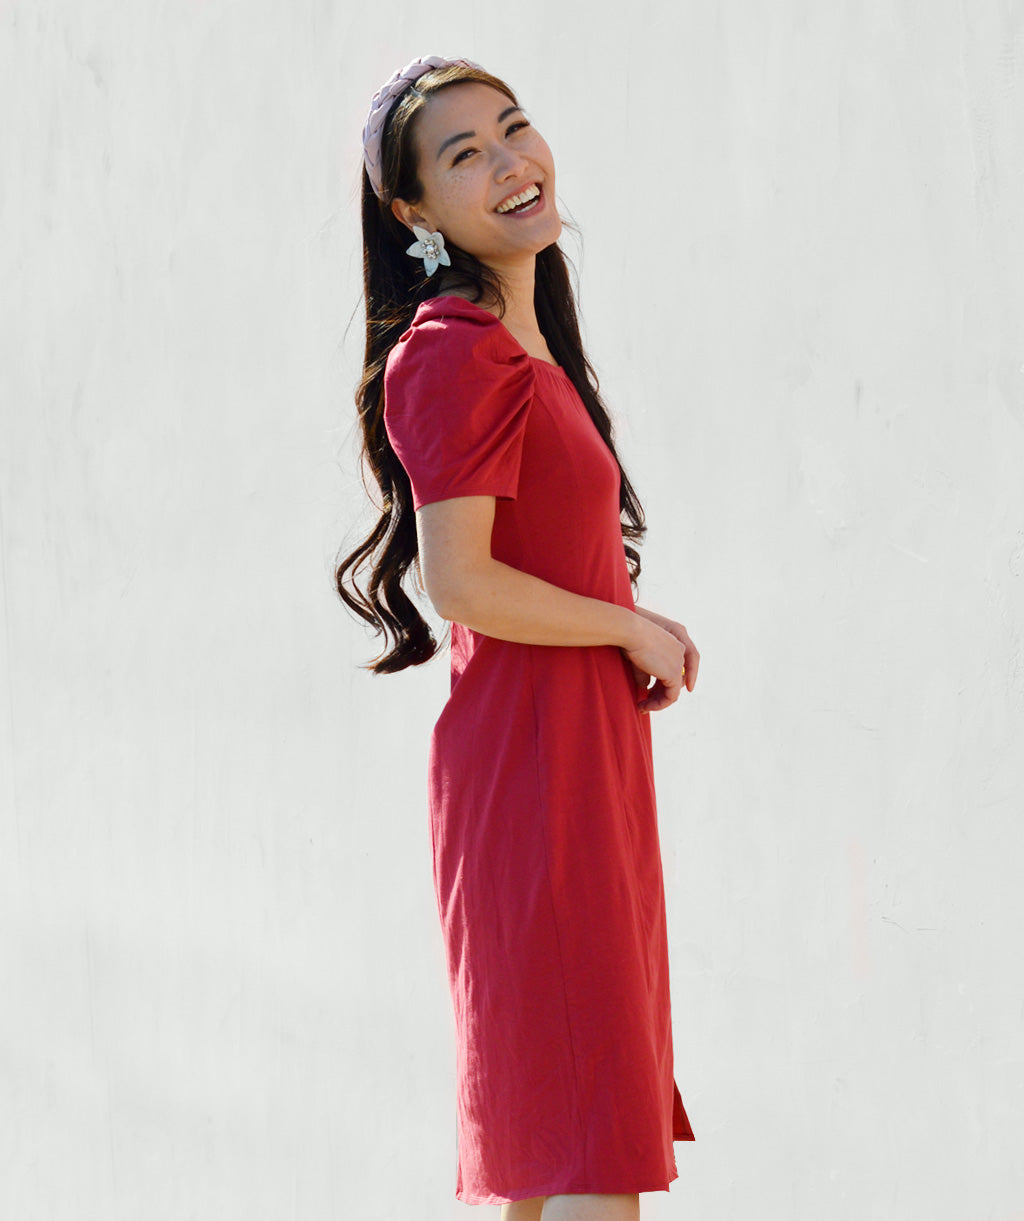 DOROTHY puff sleeve dress in Auburn Red